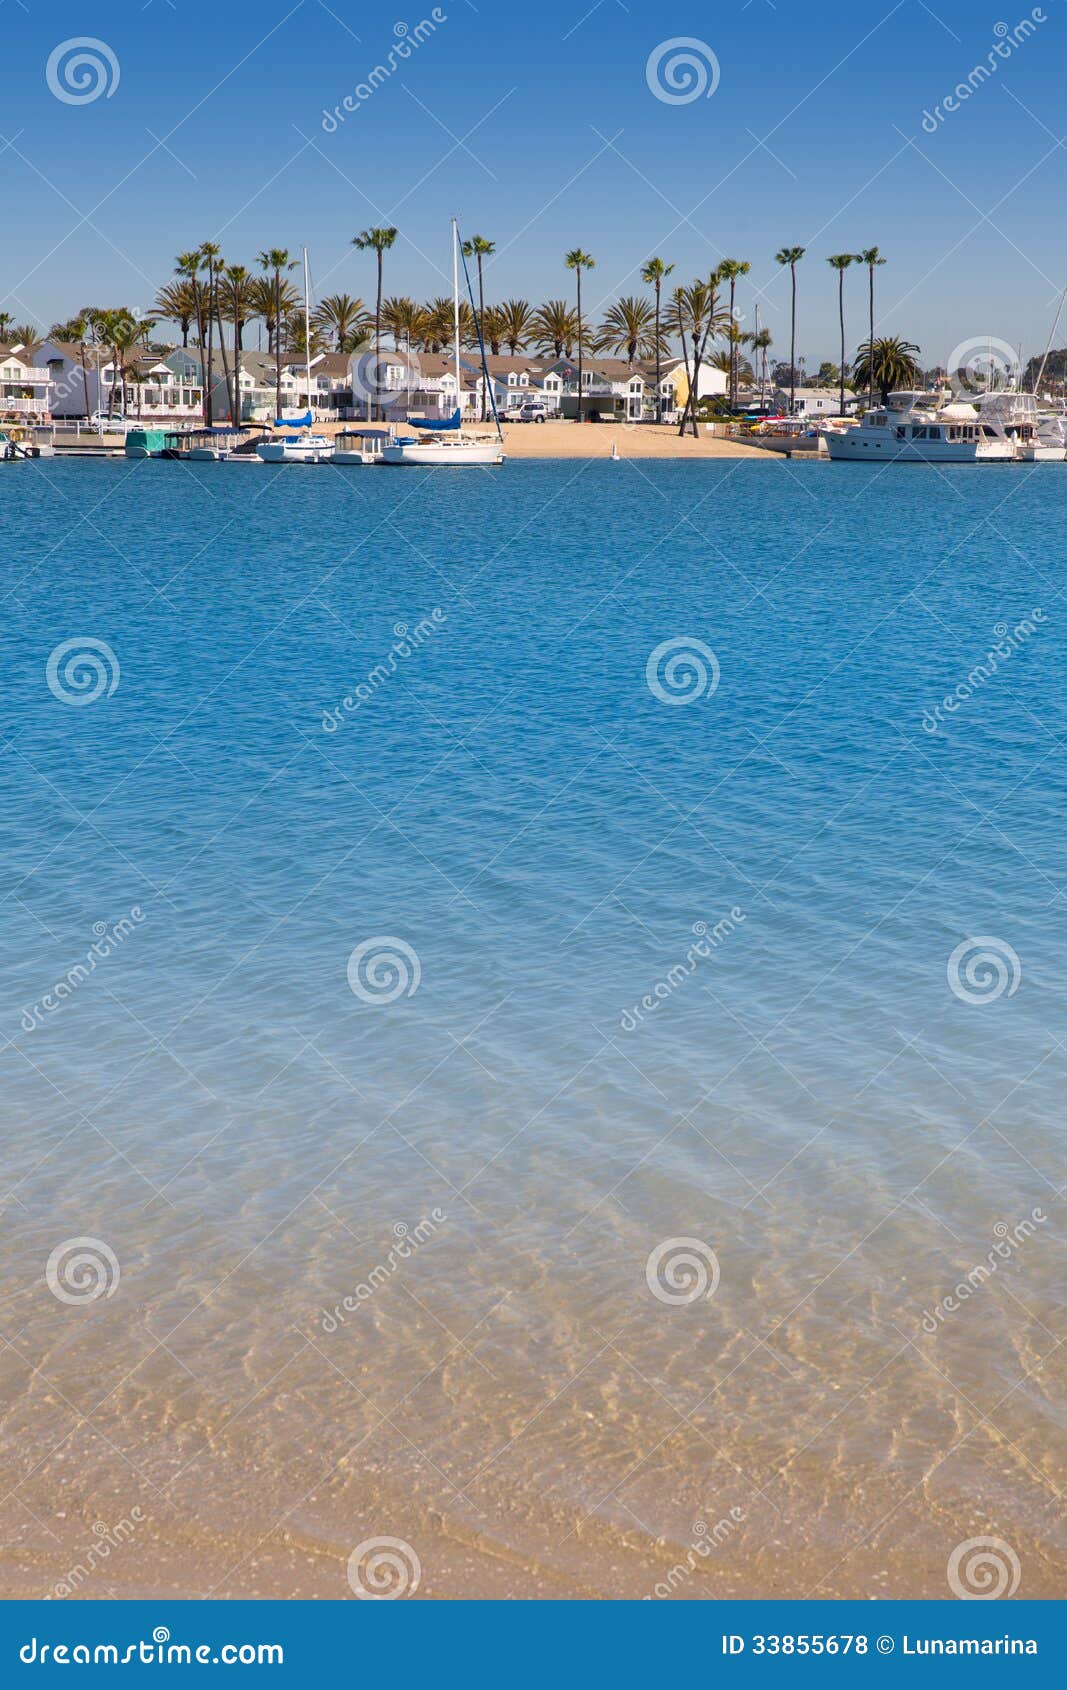 newport bay california balboa peninsula and lido island